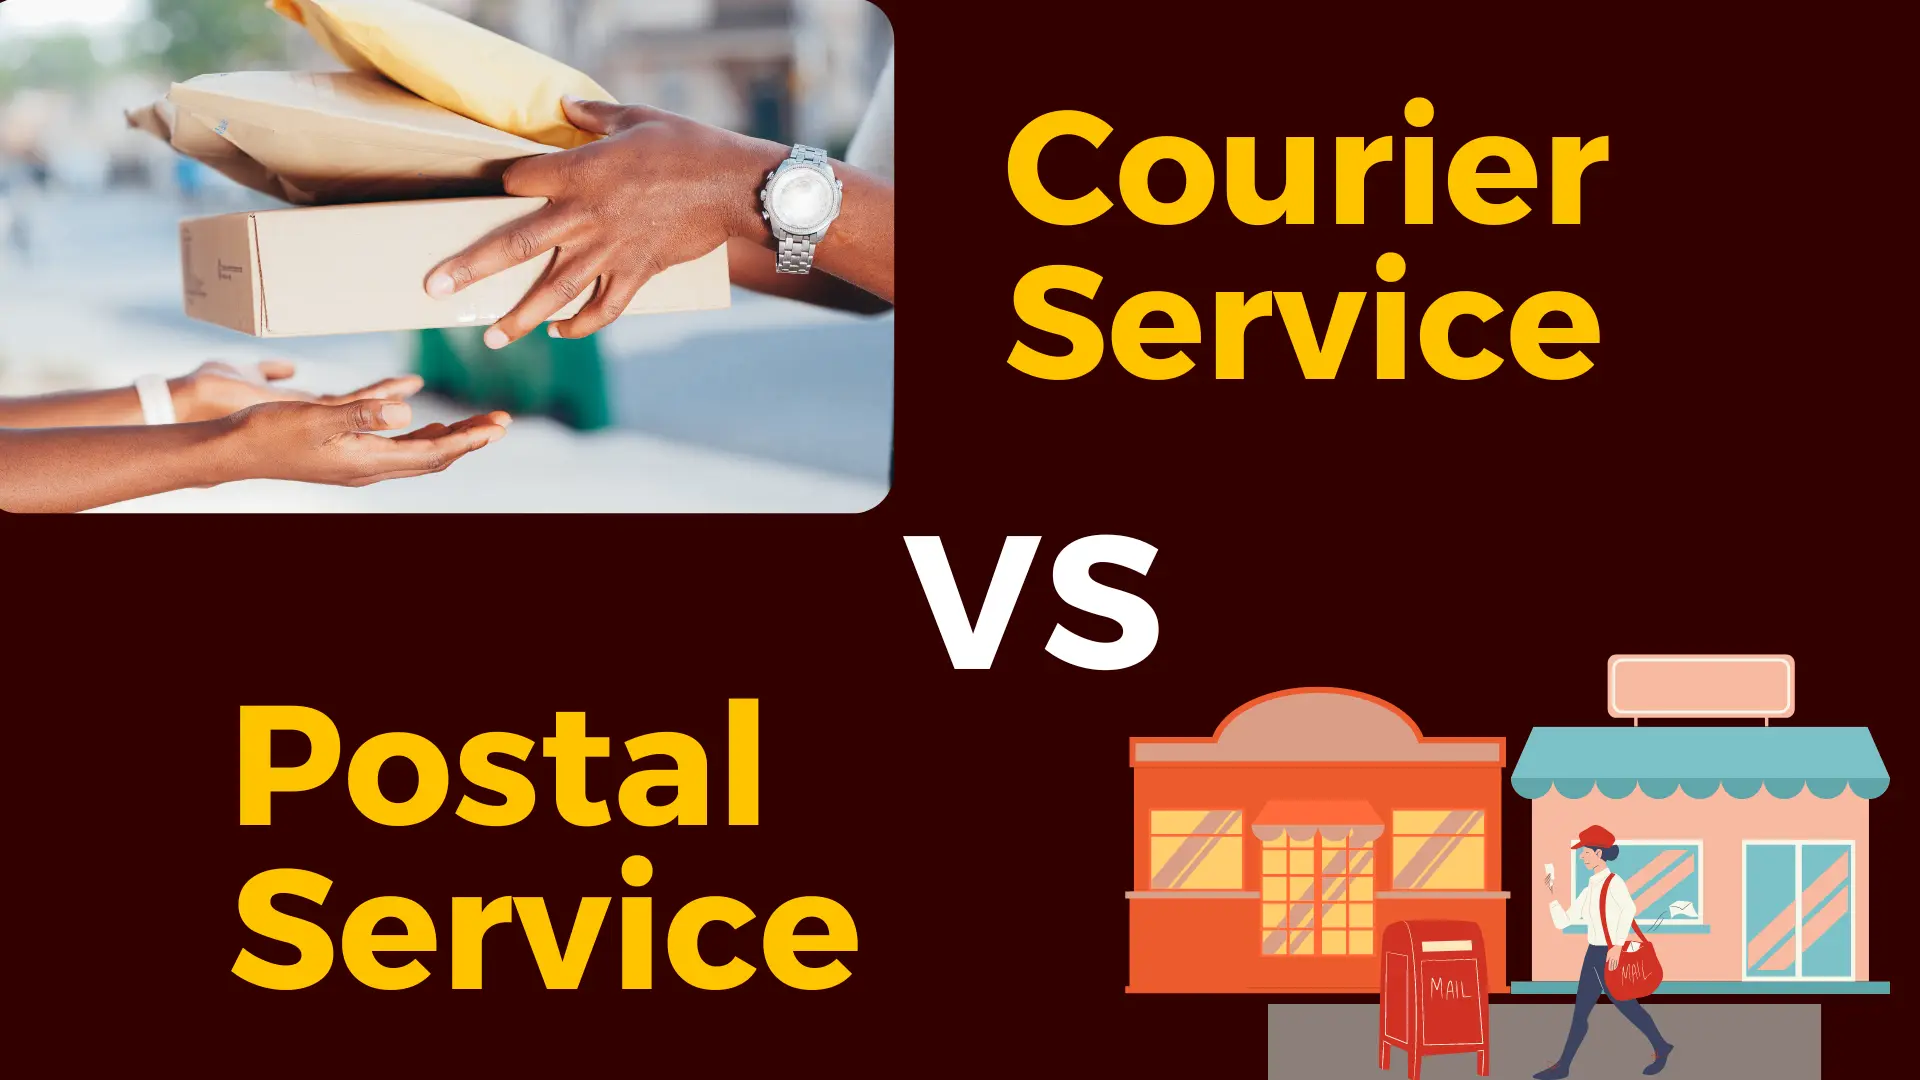 Courier service VS Postal Service